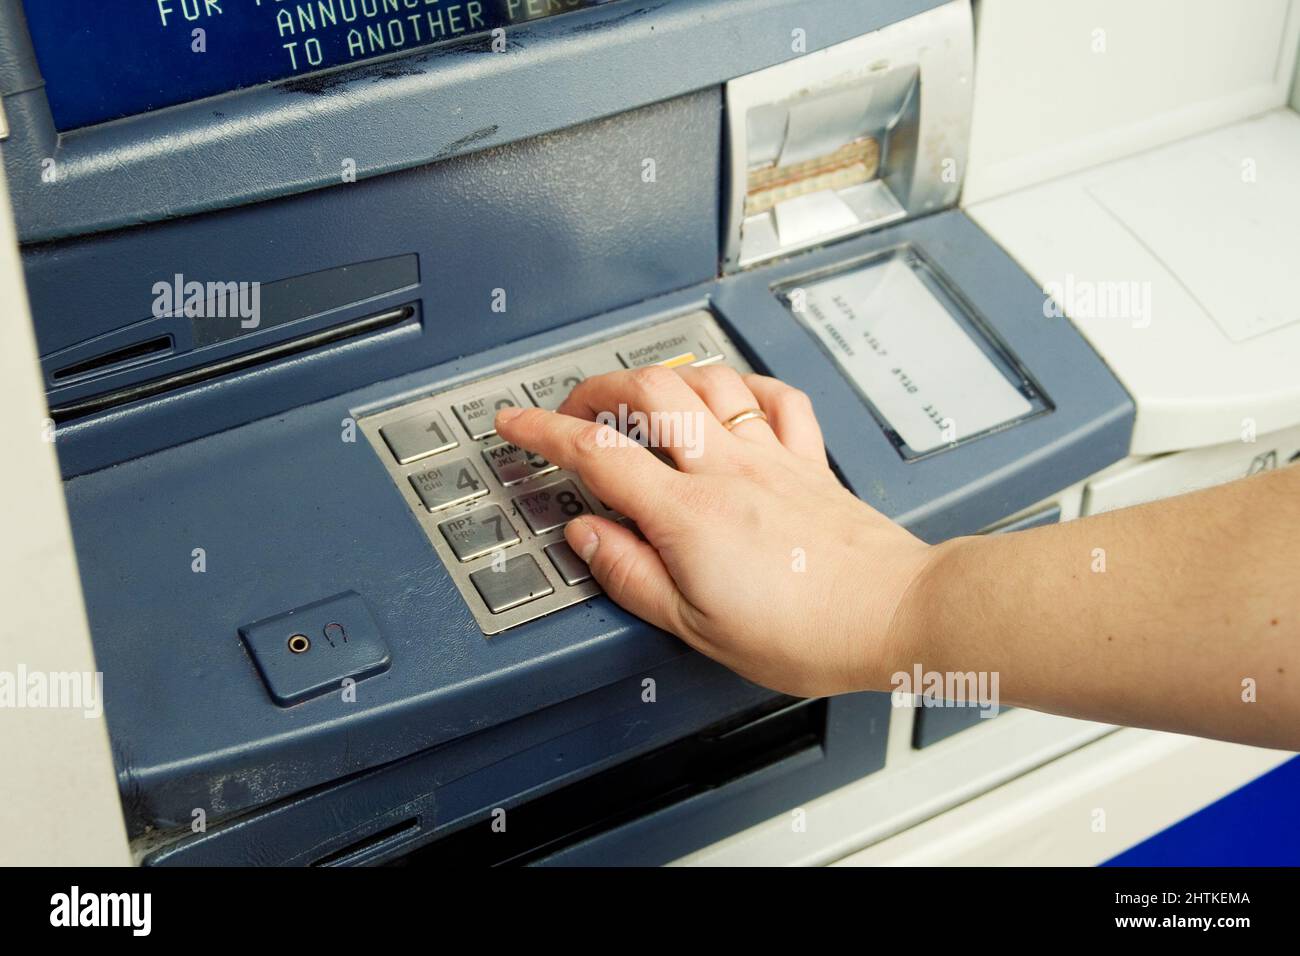 Human hand entering ATM banking cash machine pin code Stock Photo